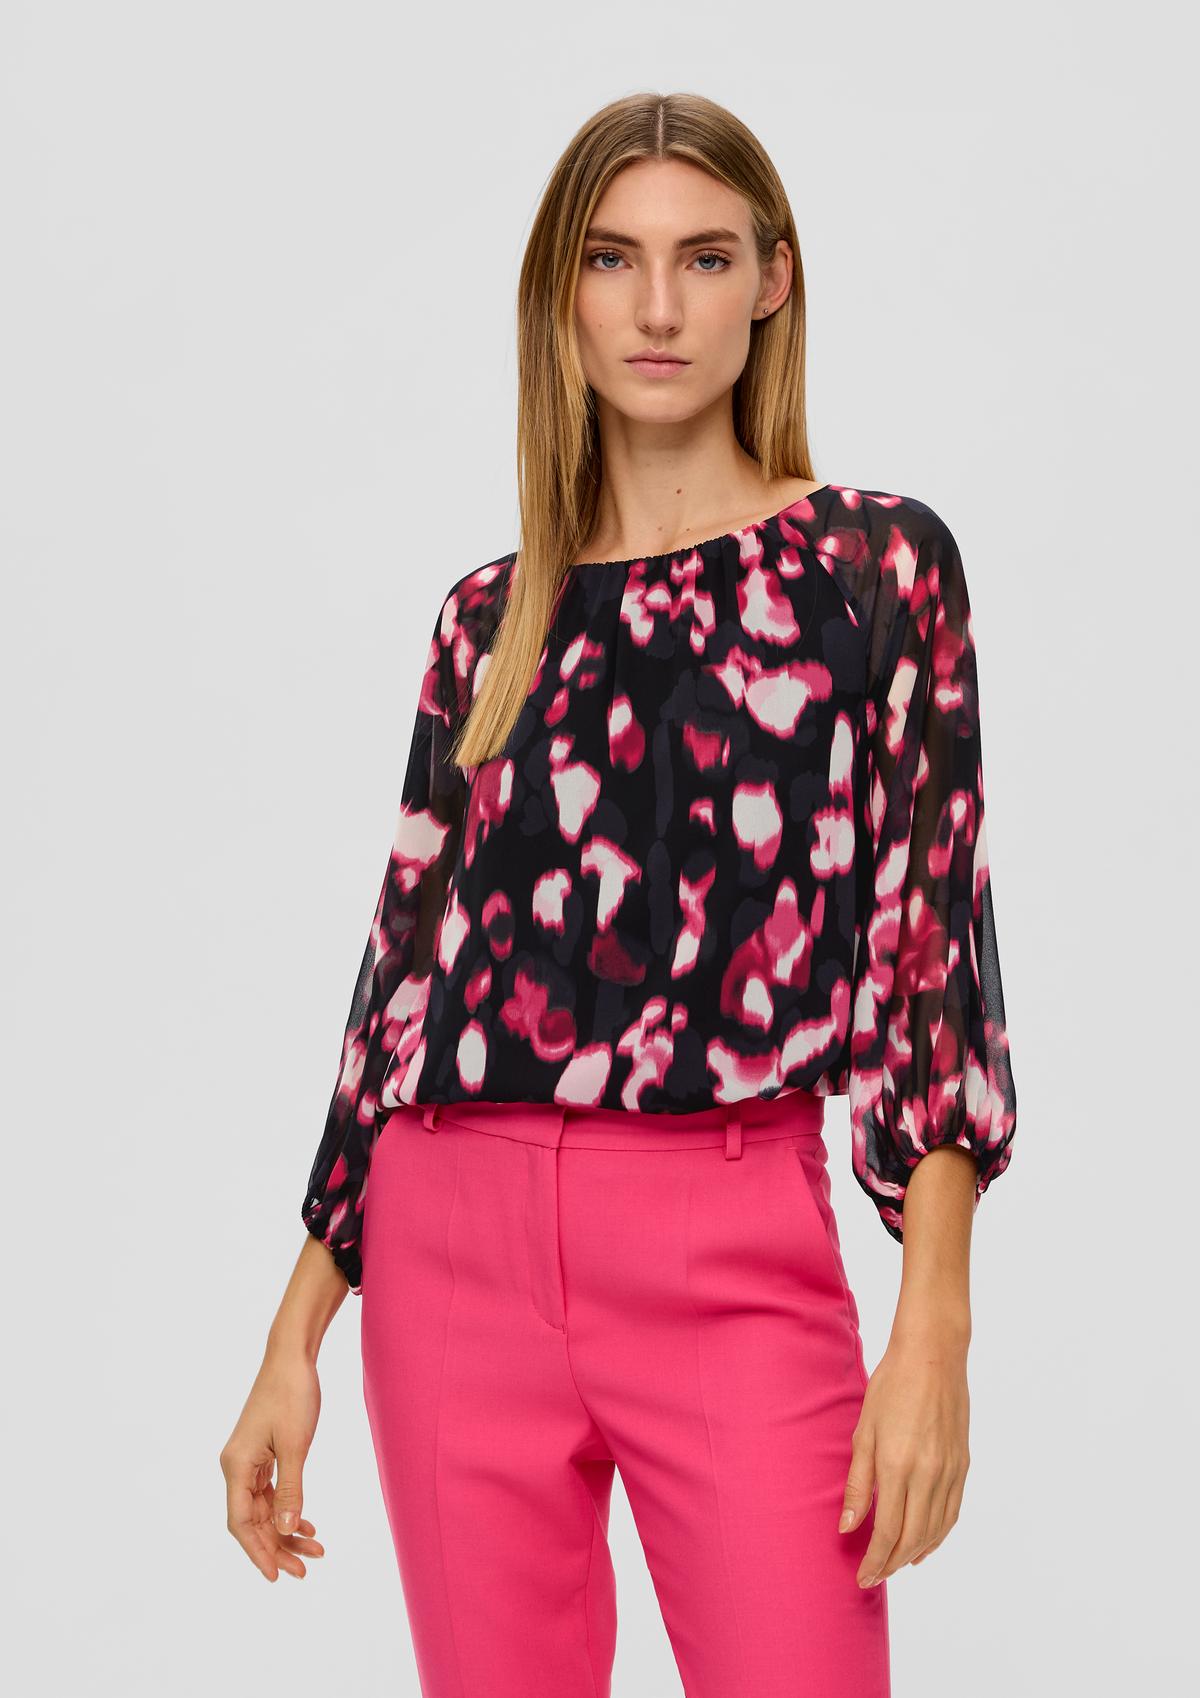 Semi-sheer chiffon blouse